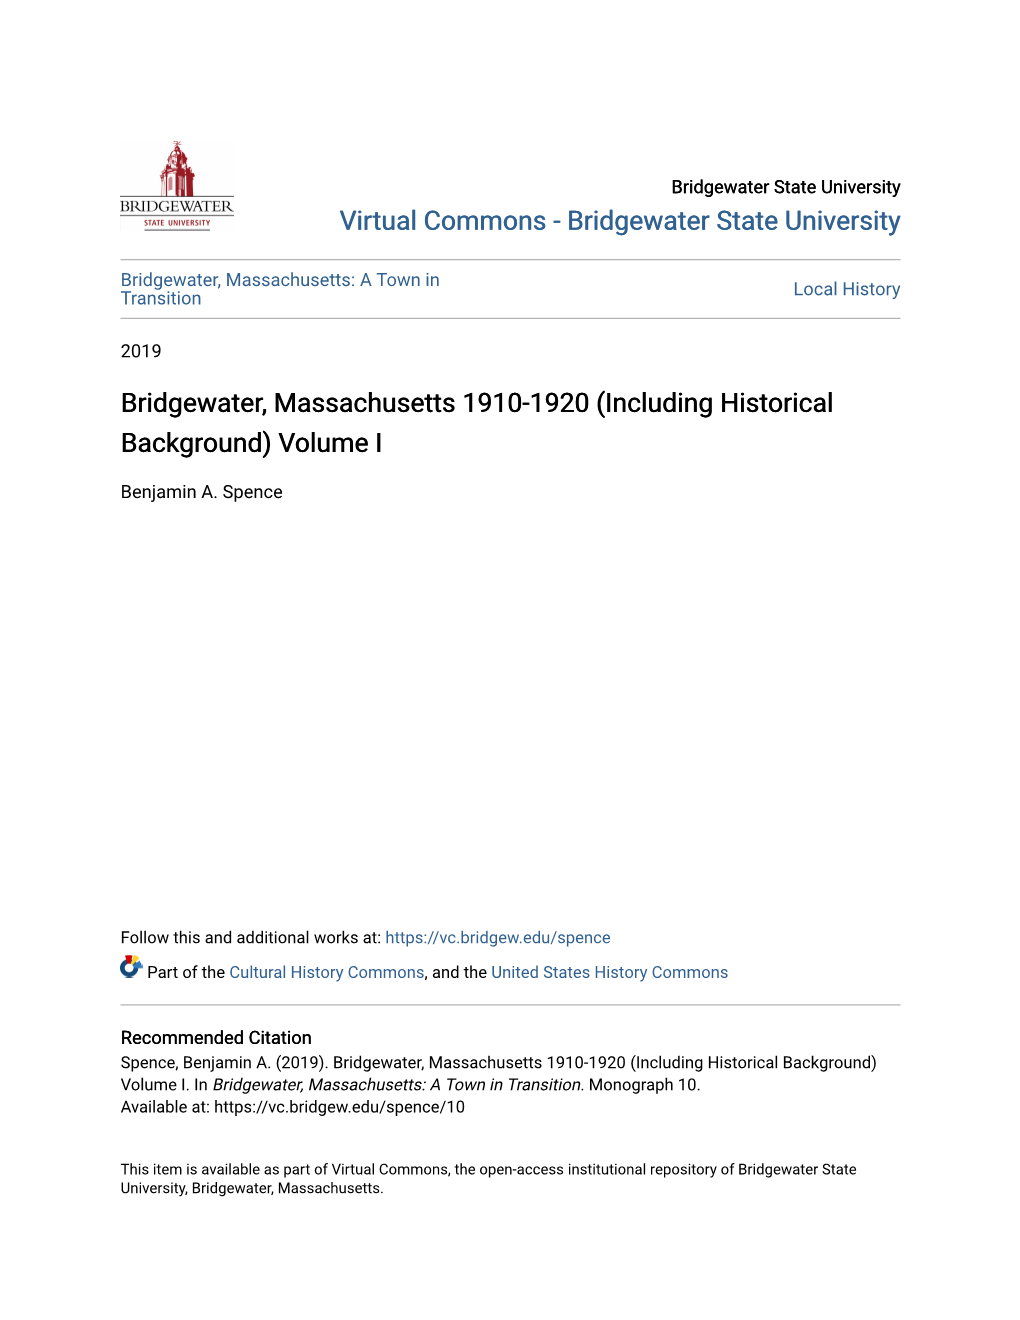 Bridgewater, Massachusetts 1910-1920 (Including Historical Background) Volume I